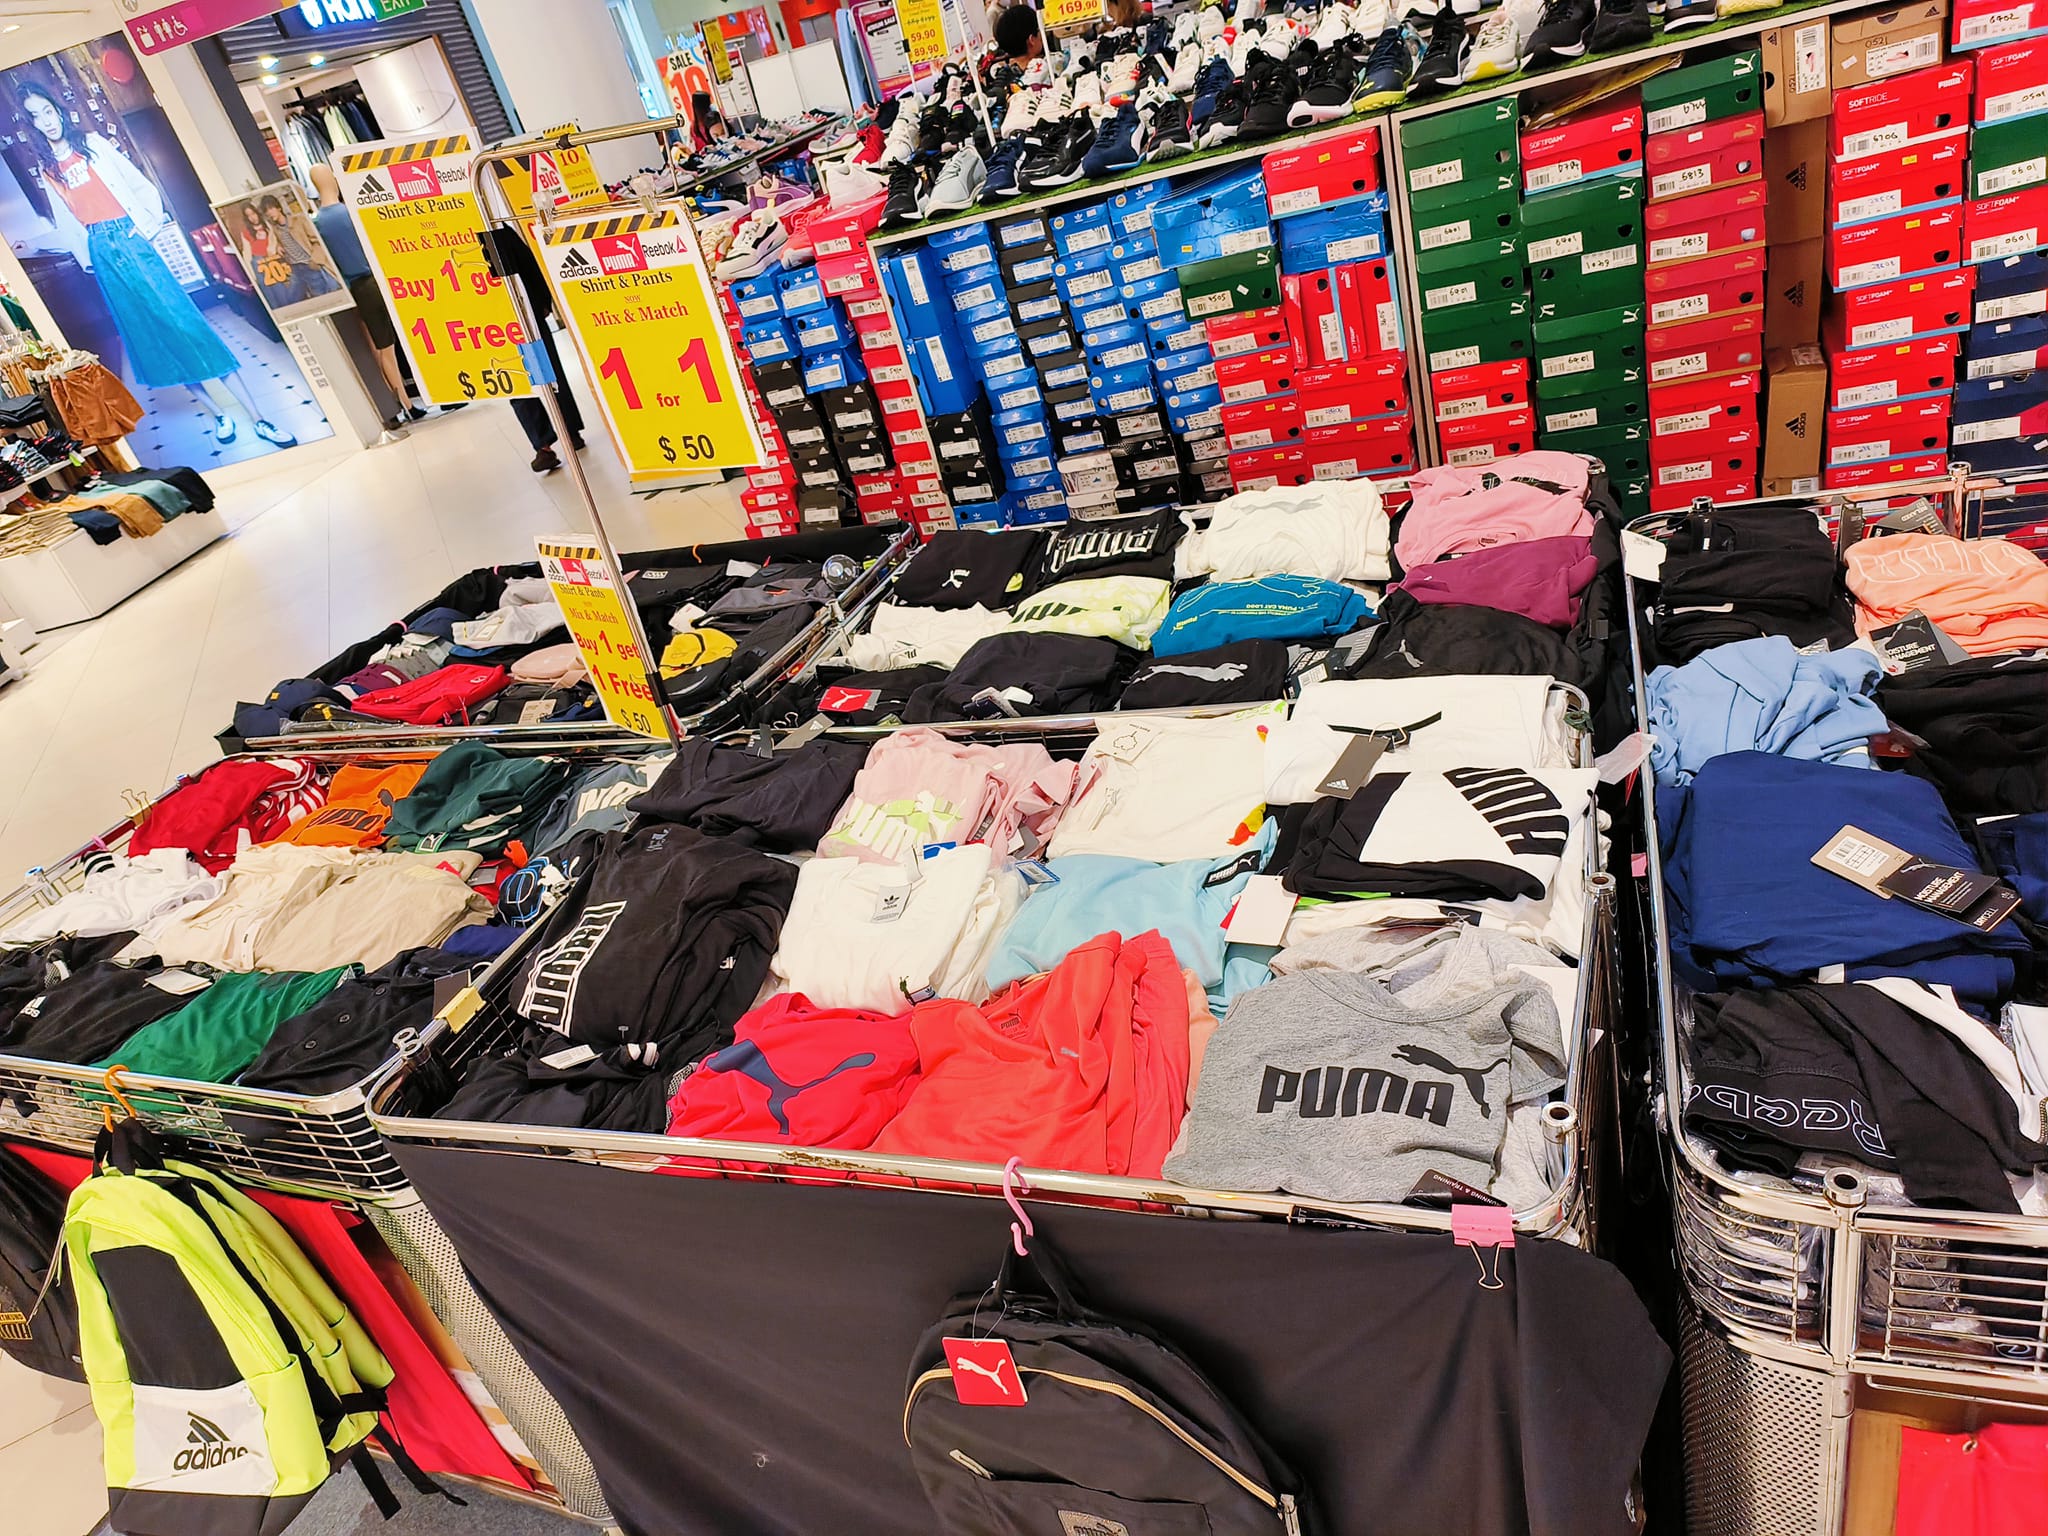 Lobang: Lot One's Atrium Sale Has Buy 1 Get 1 Free Sports Apparels From Adidas, Puma, Reebok & More Till 26 Mar 23 - 21